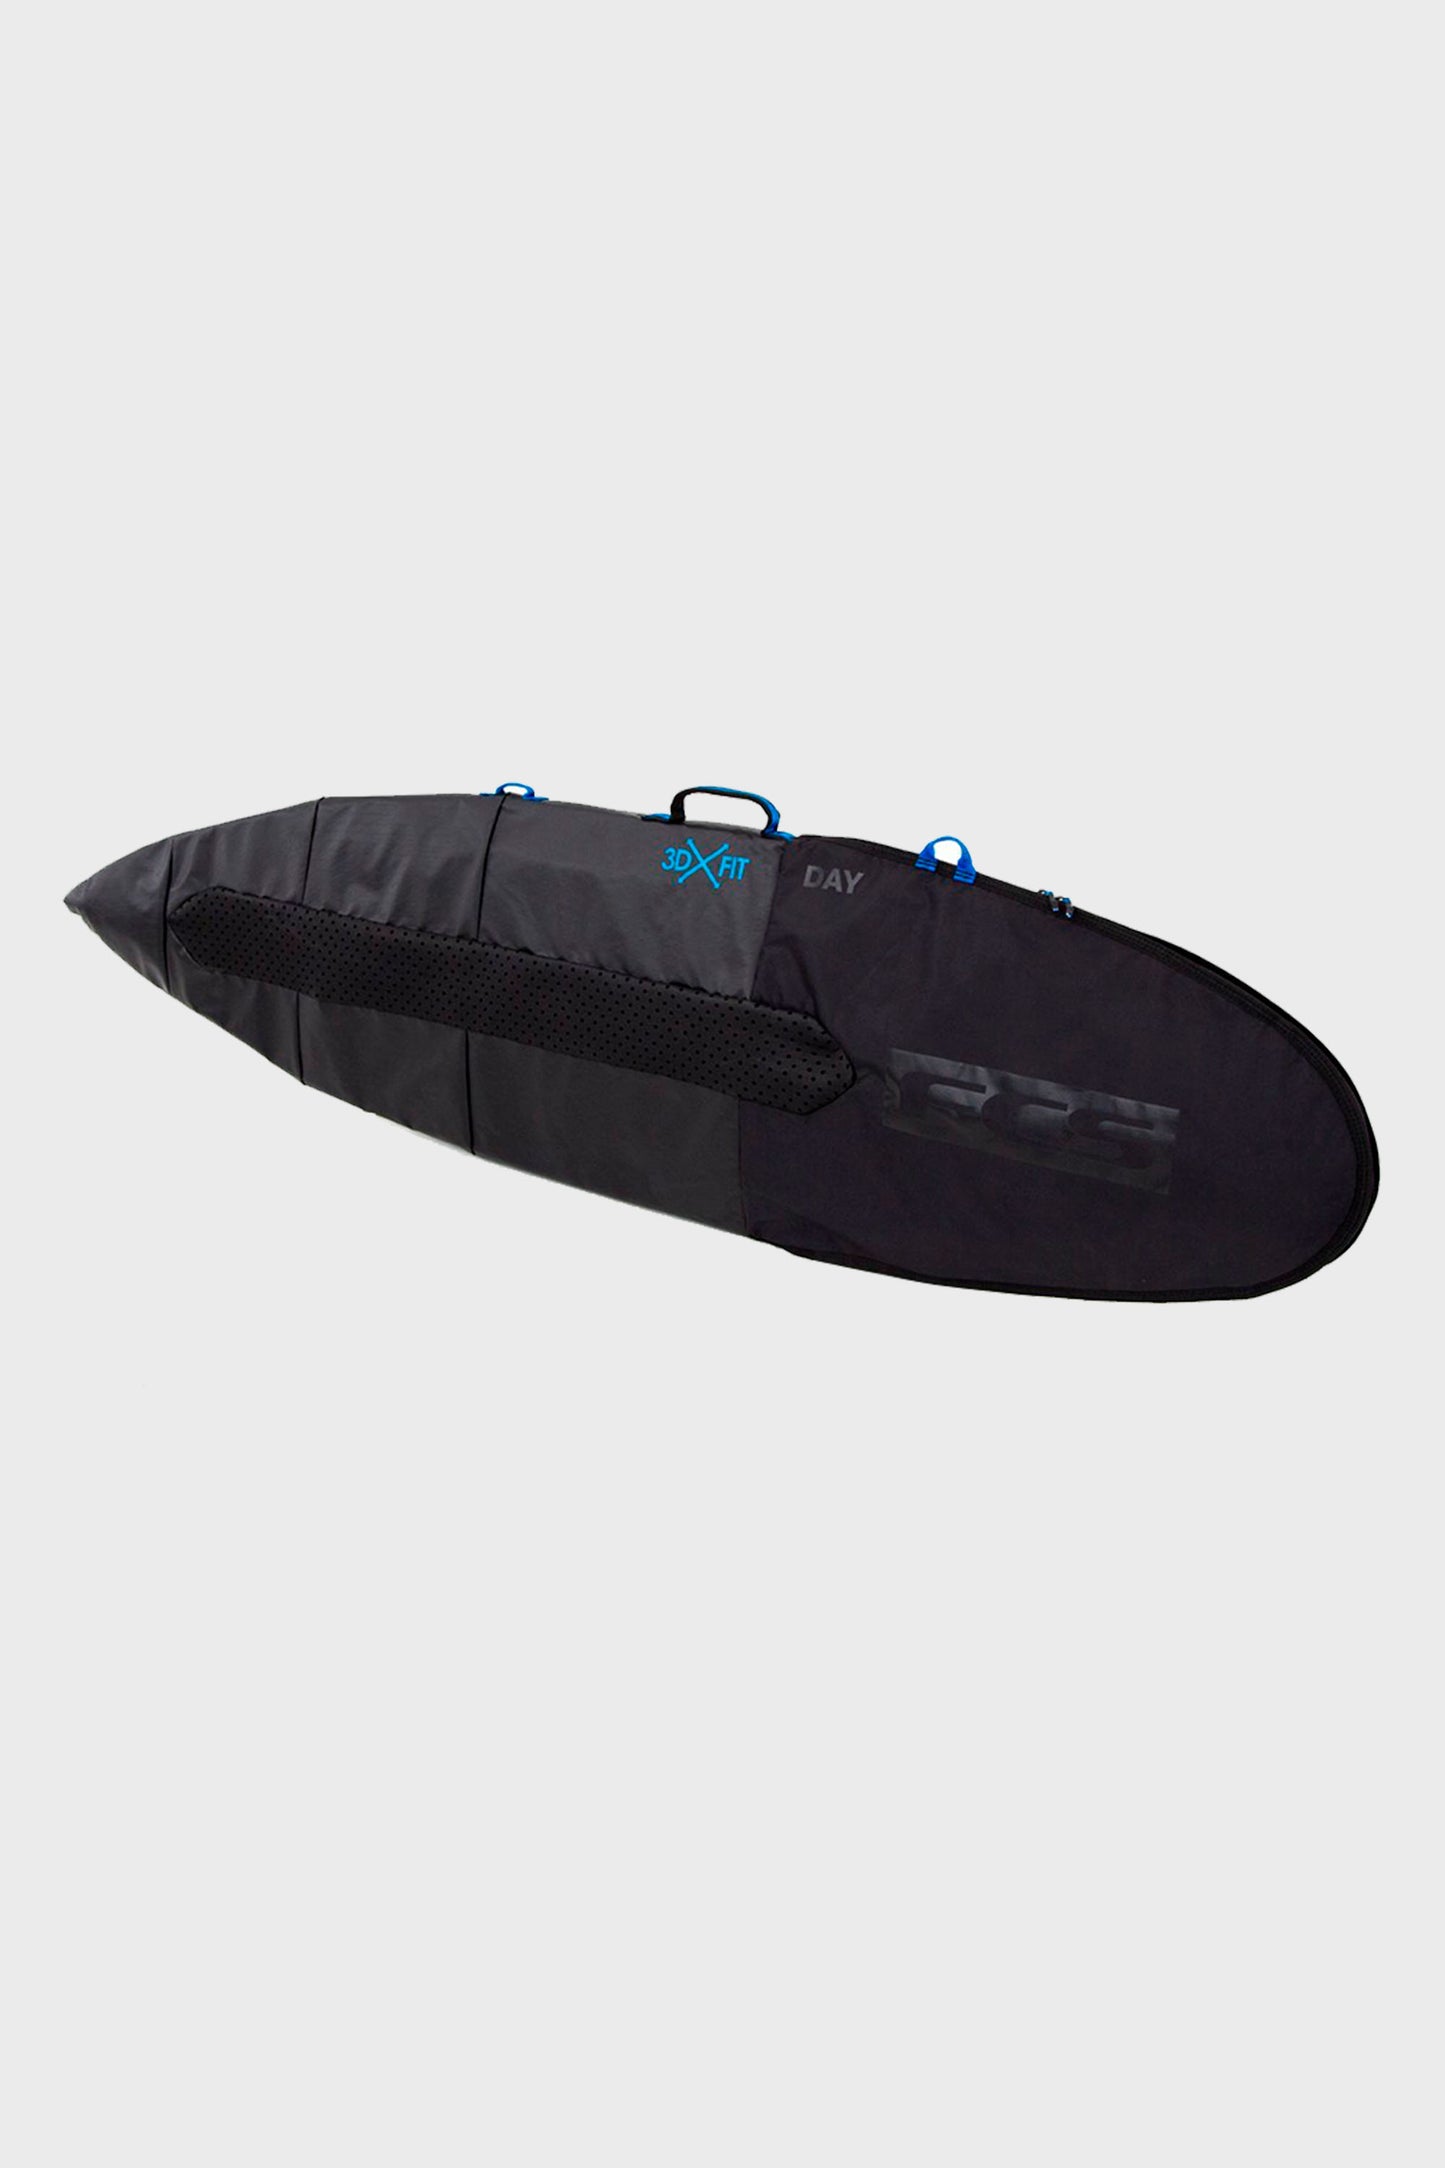 Pukas-Surf-Shop-FCS-Boardbags-Day-all-purpose-6.0